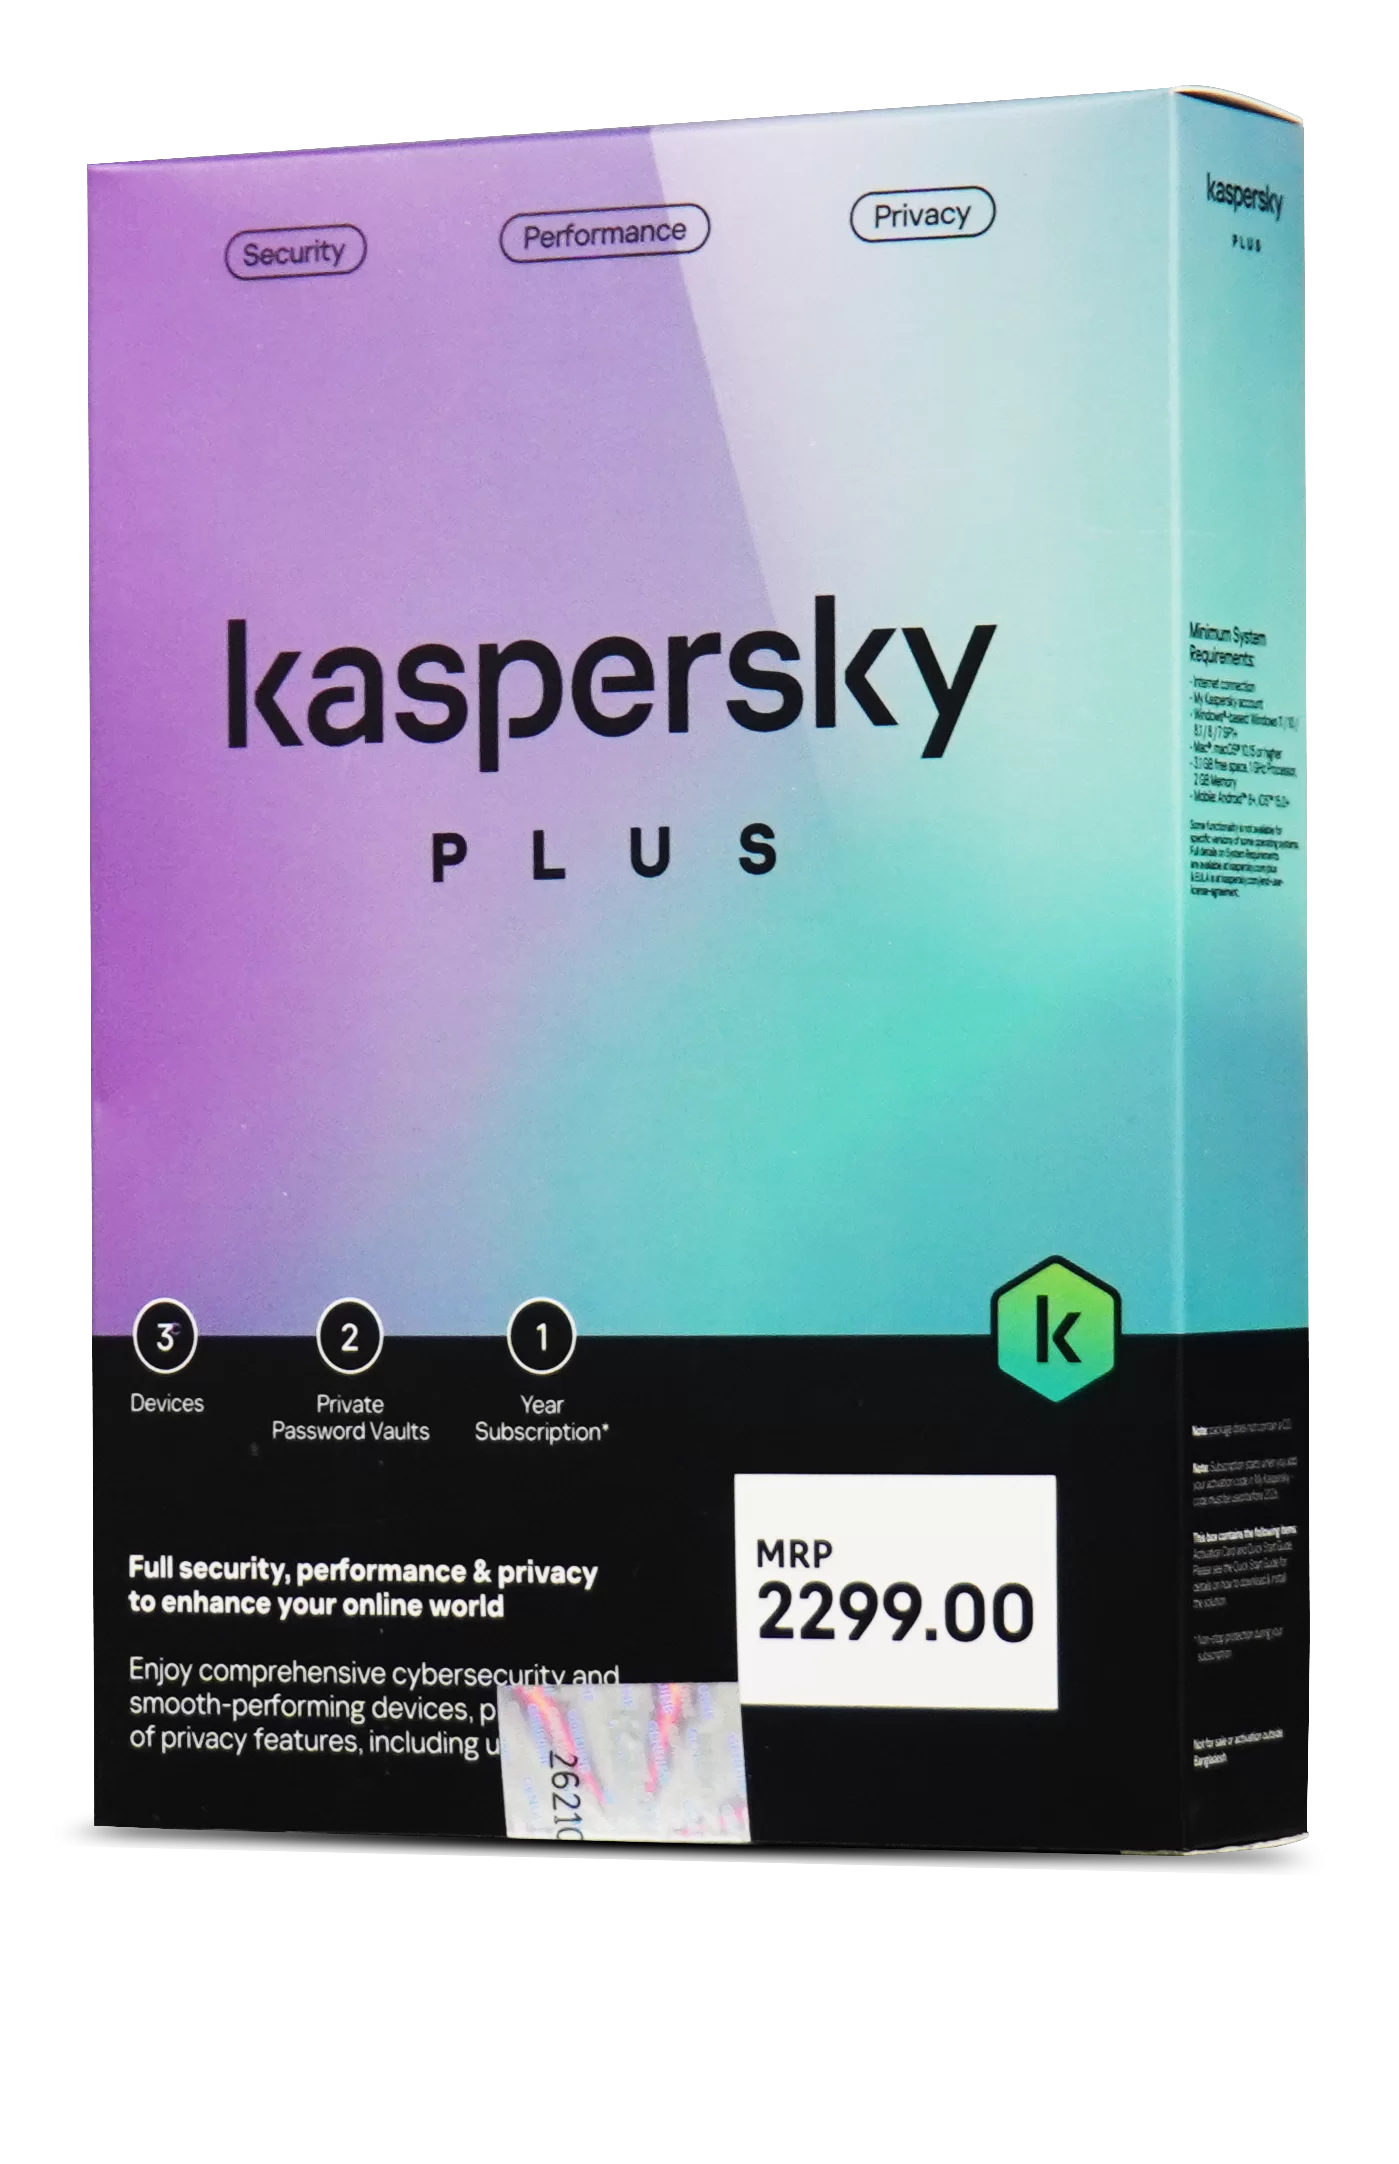 Kaspersky Plus 3 User Antivirus Price in BD